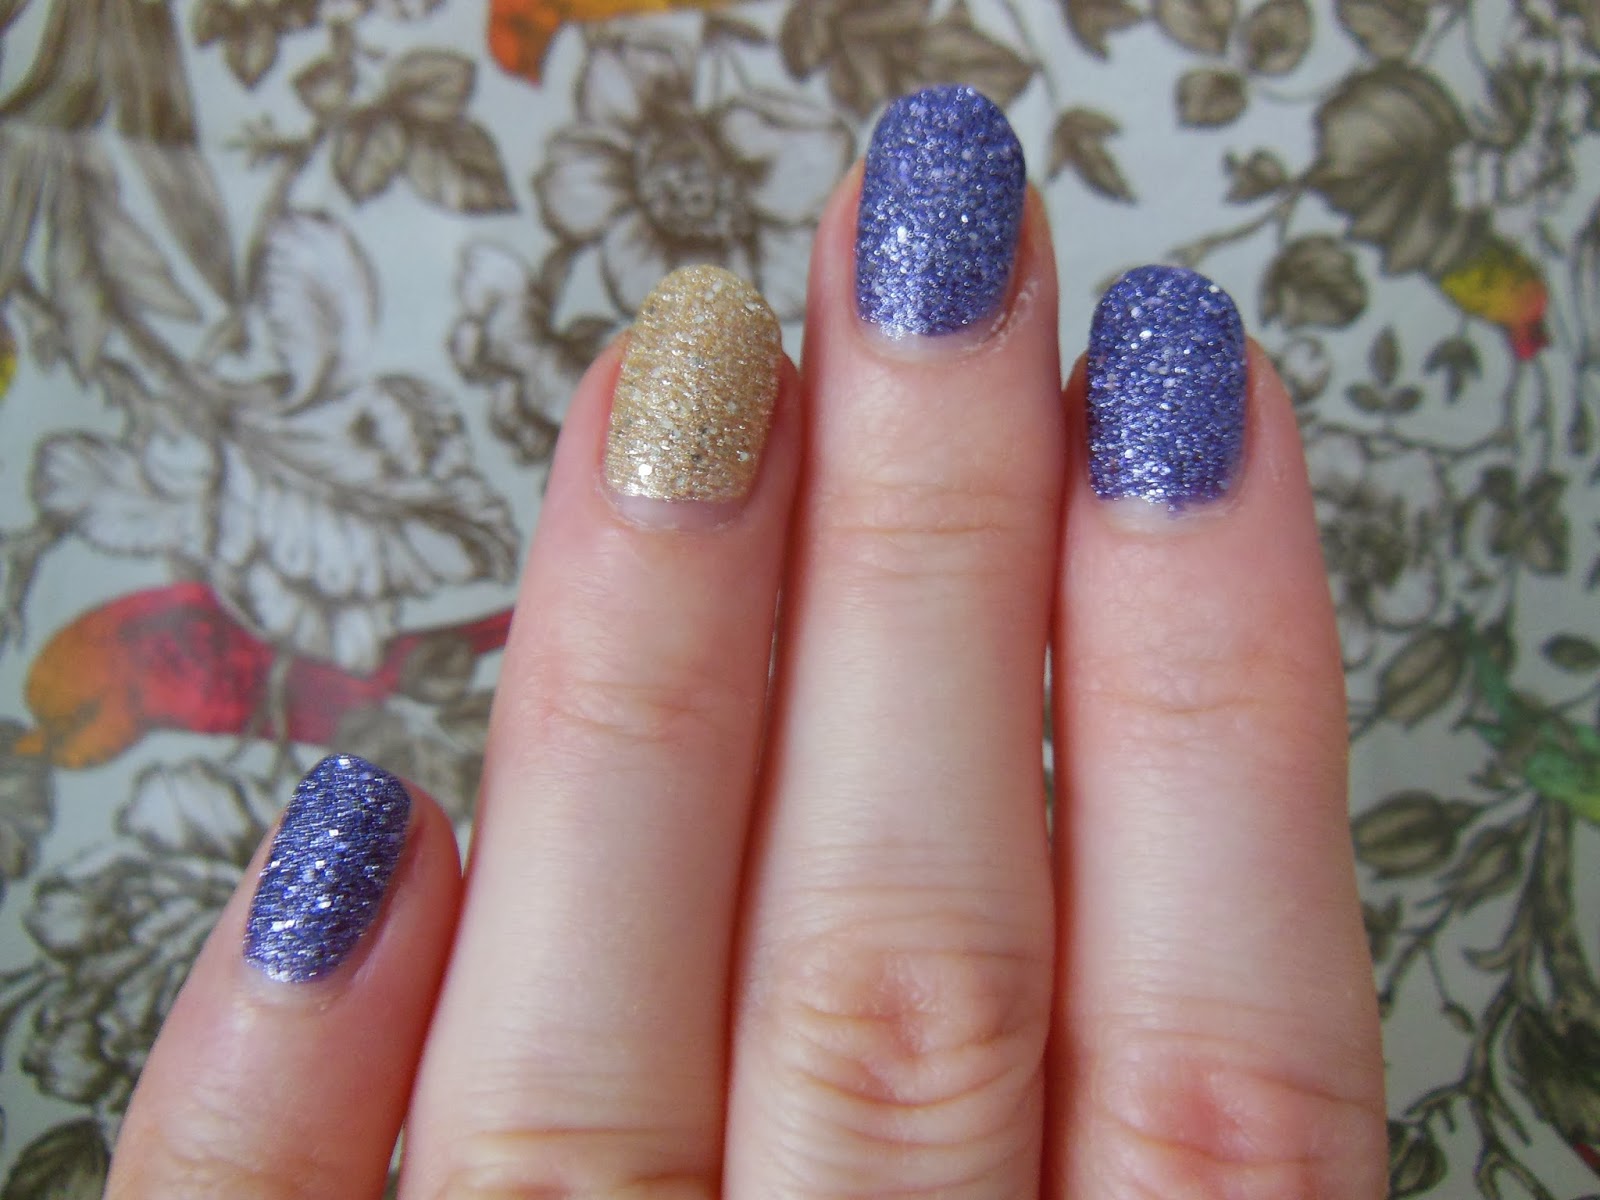 2. Silver glitter nail polish - wide 3